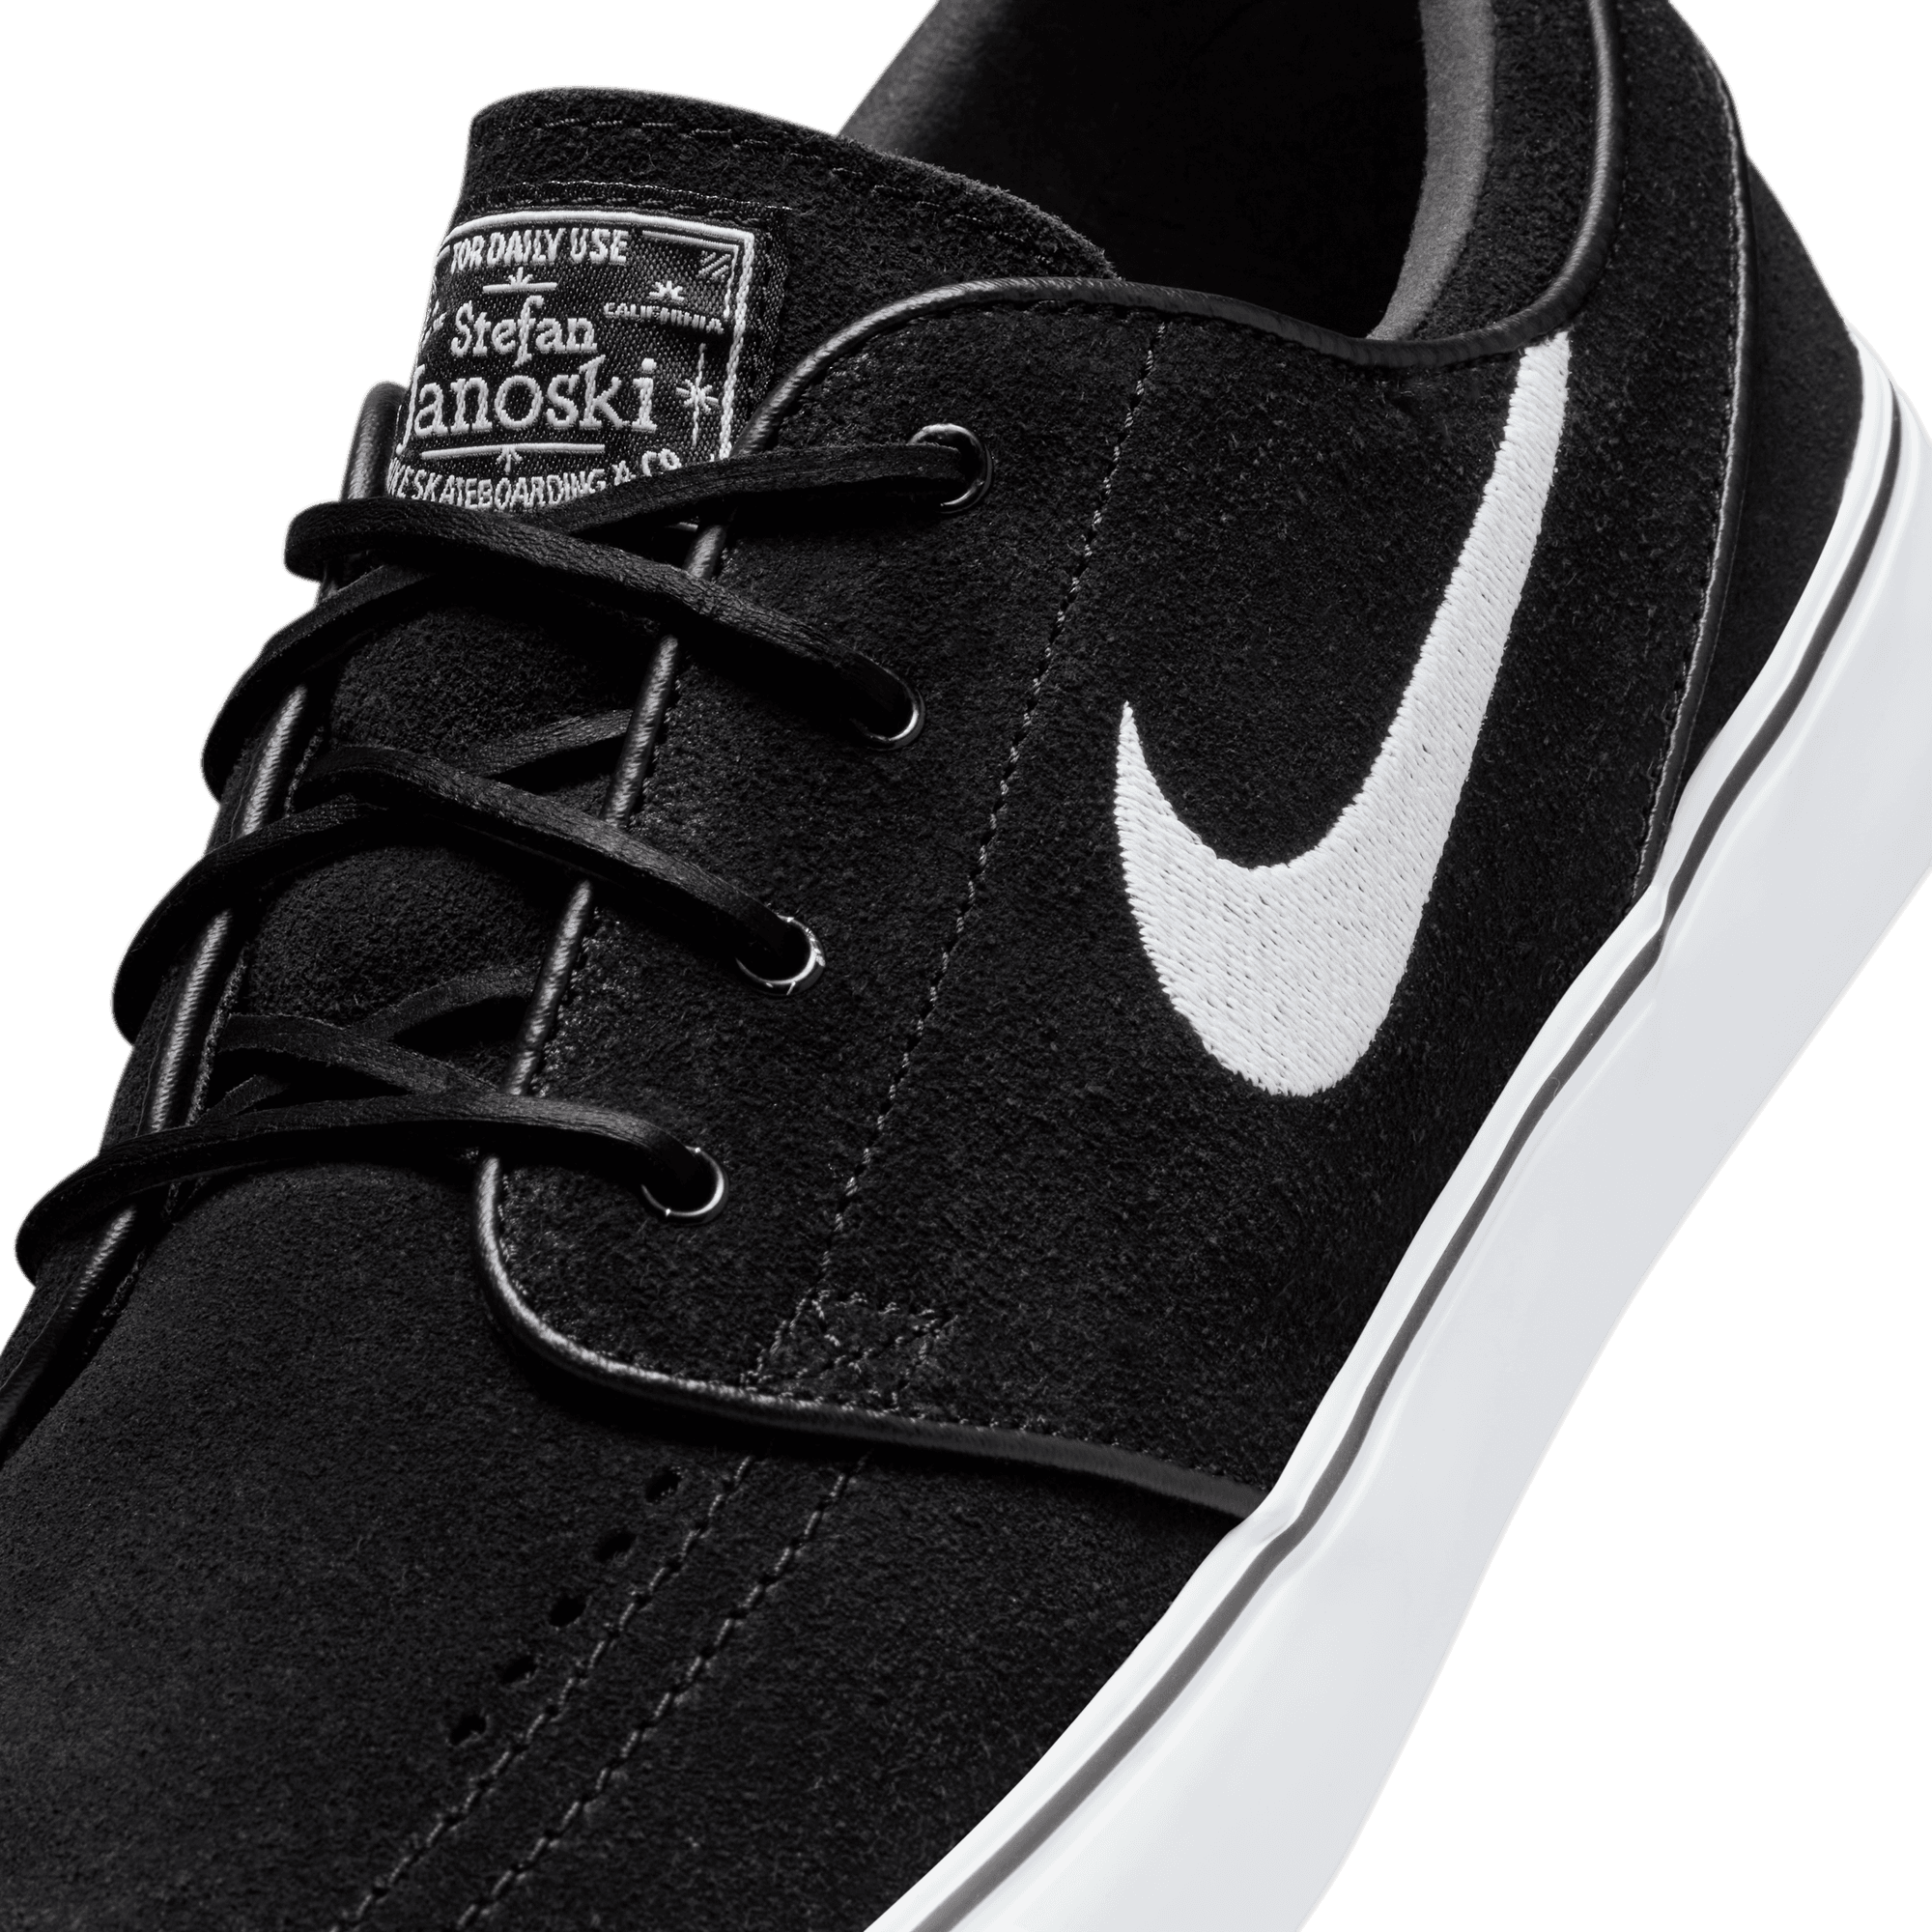 Black/White Janoski OG+ Nike SB Skate Shoe Detail